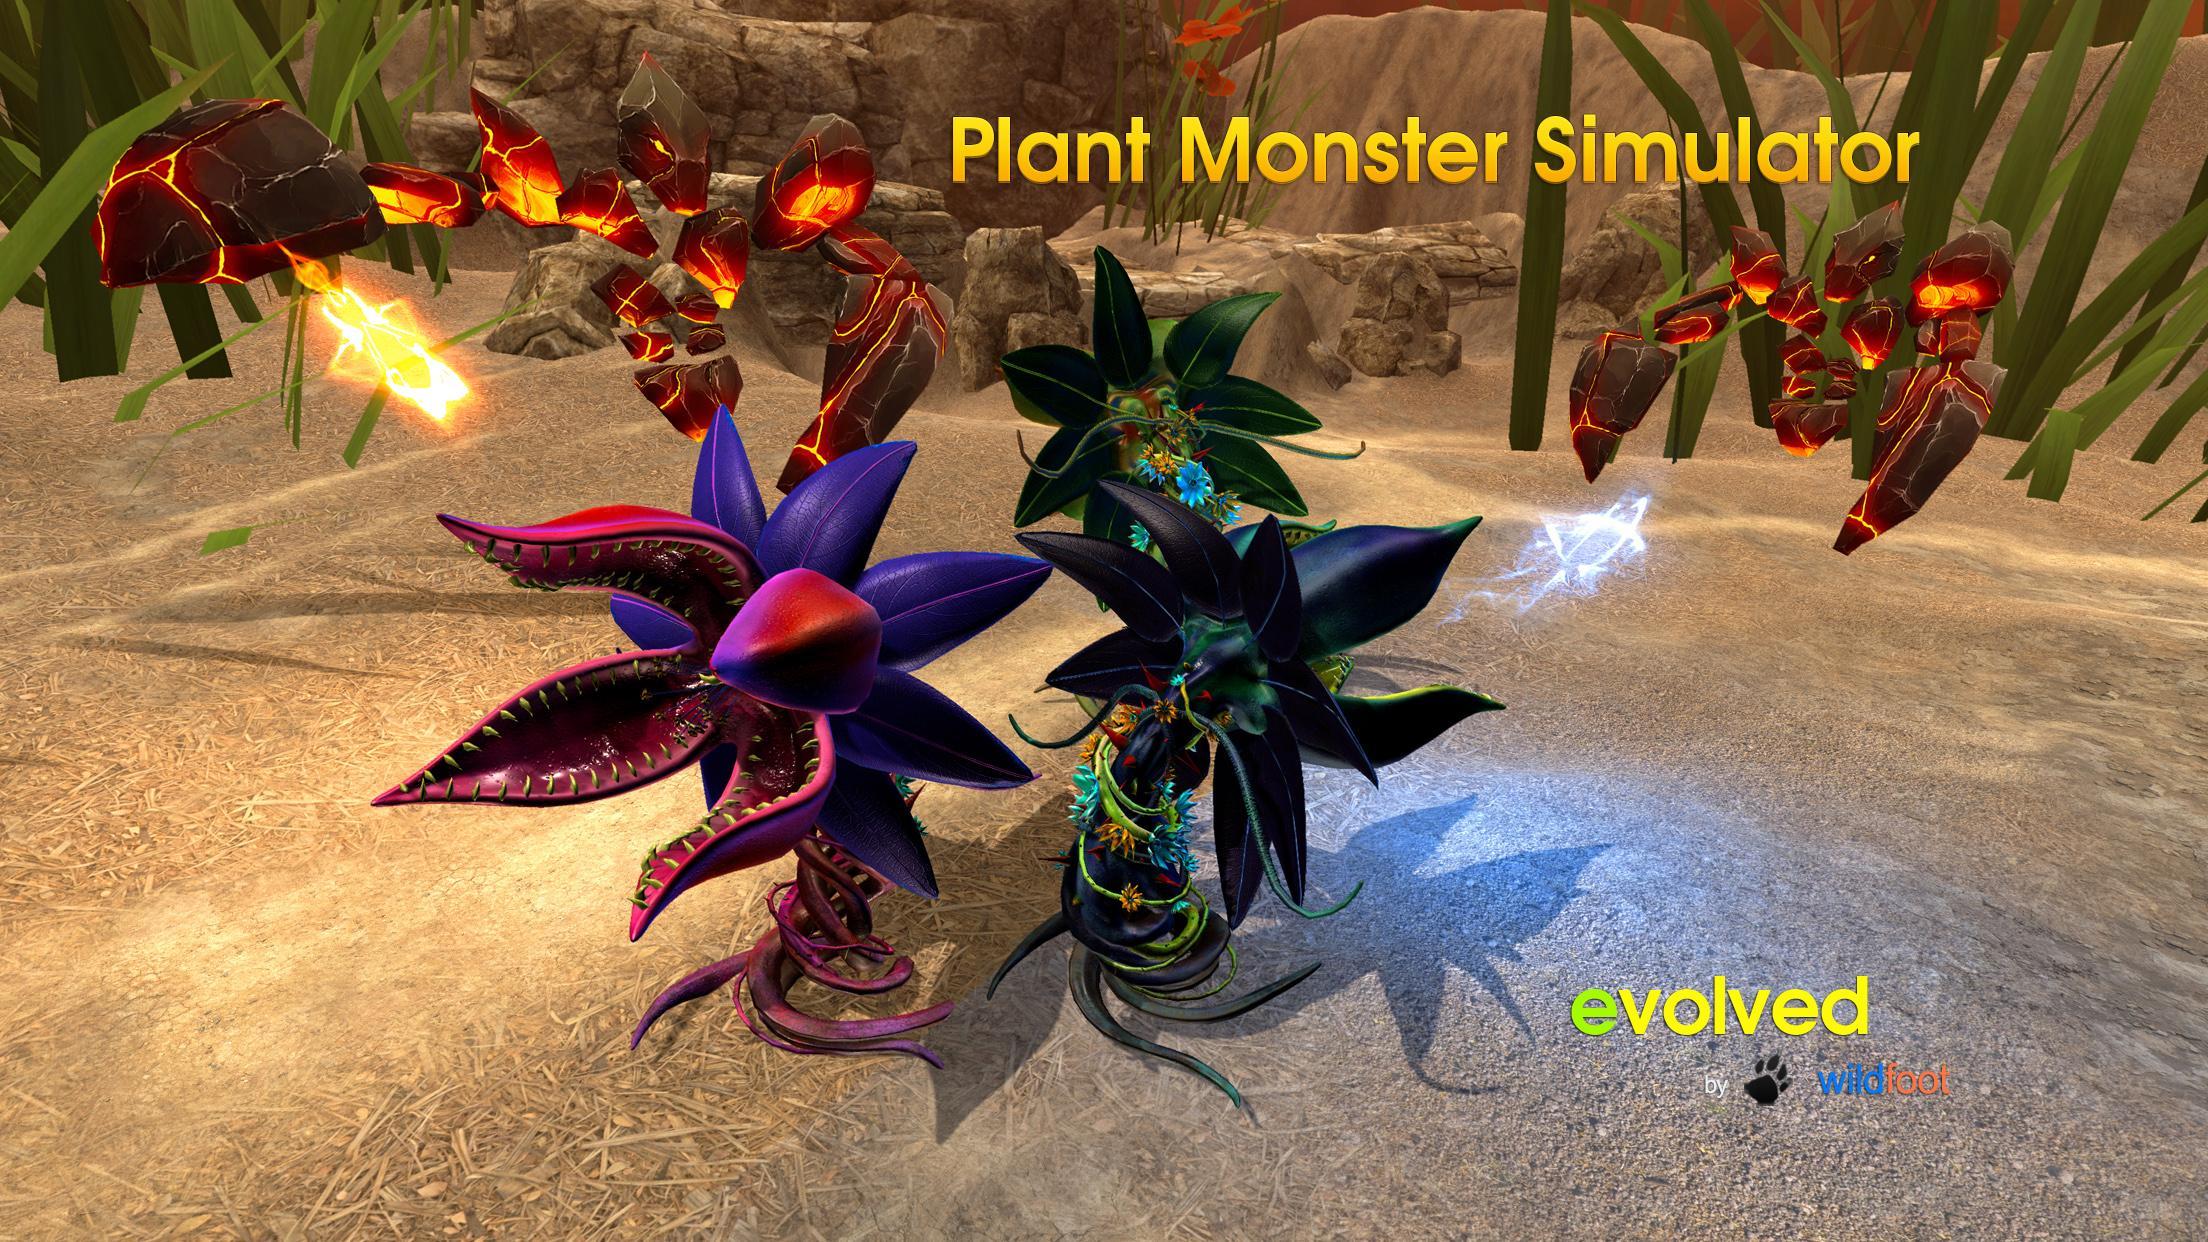 Plant Monster Simulator For Android Apk Download - increible el nuevo monster simulator de roblox